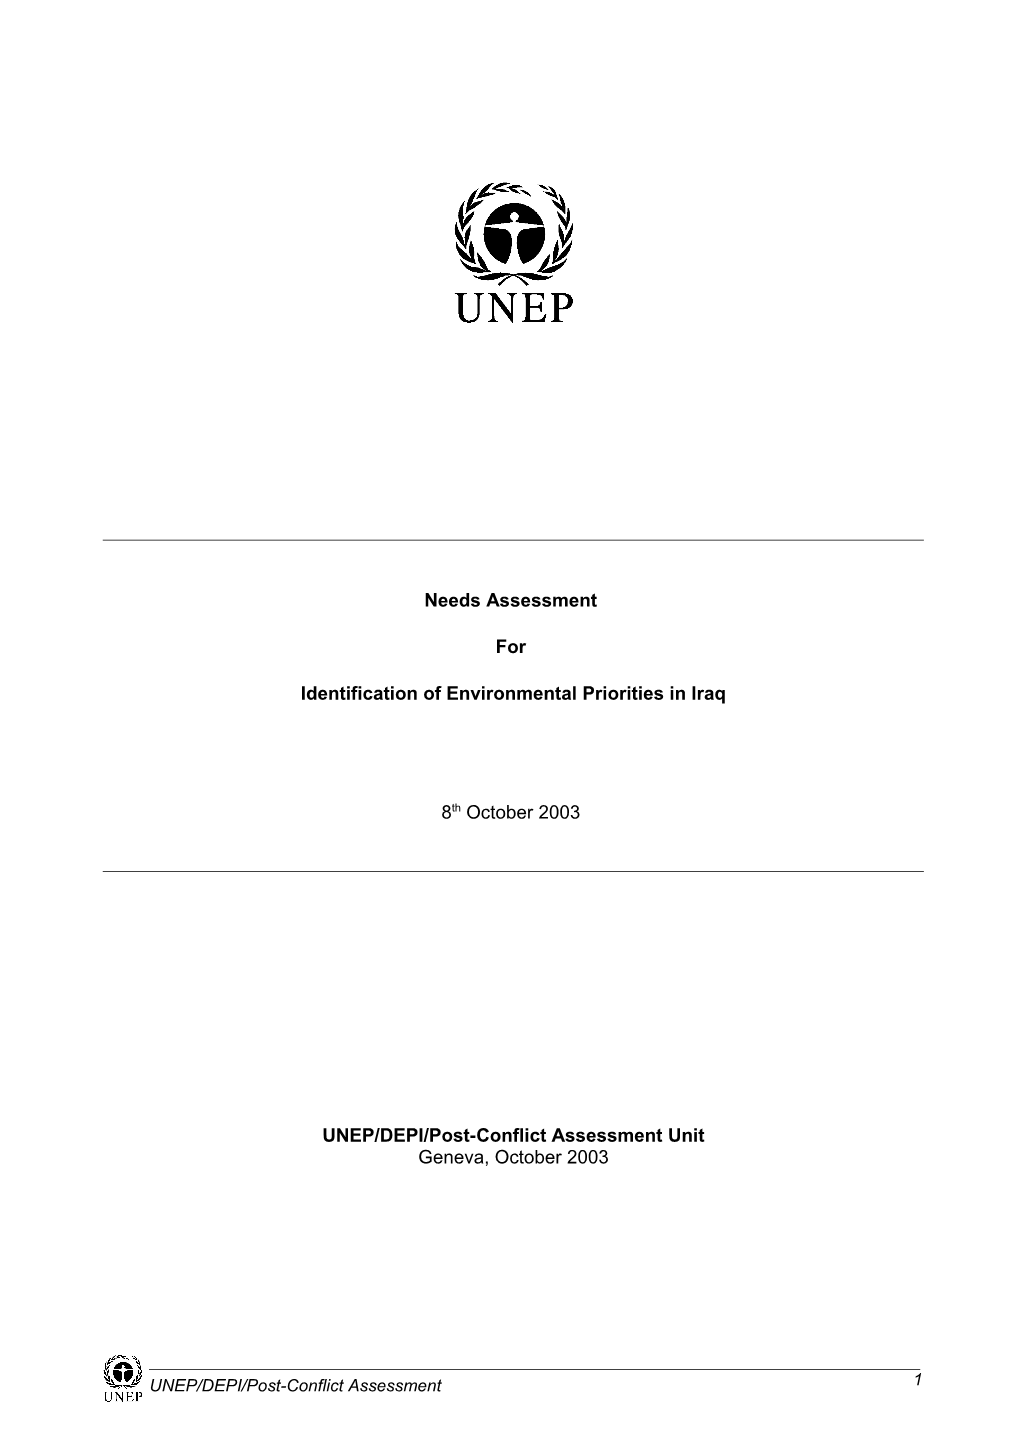 UNDG Needs Assessment: UNEP Input Paper